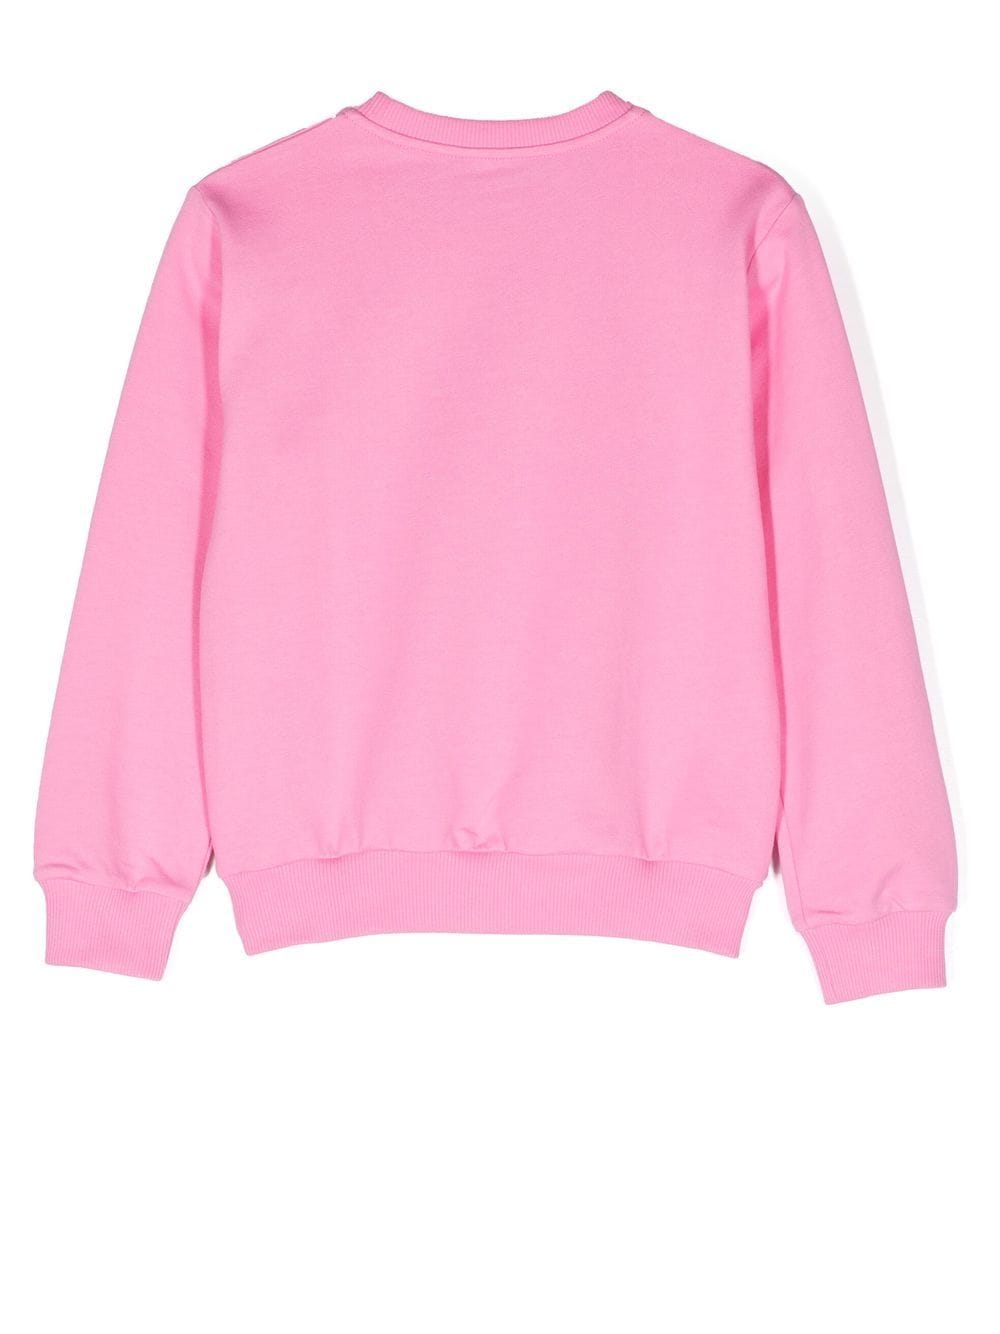 Versace Kids Pink Medusa Crystal Sweatshirt